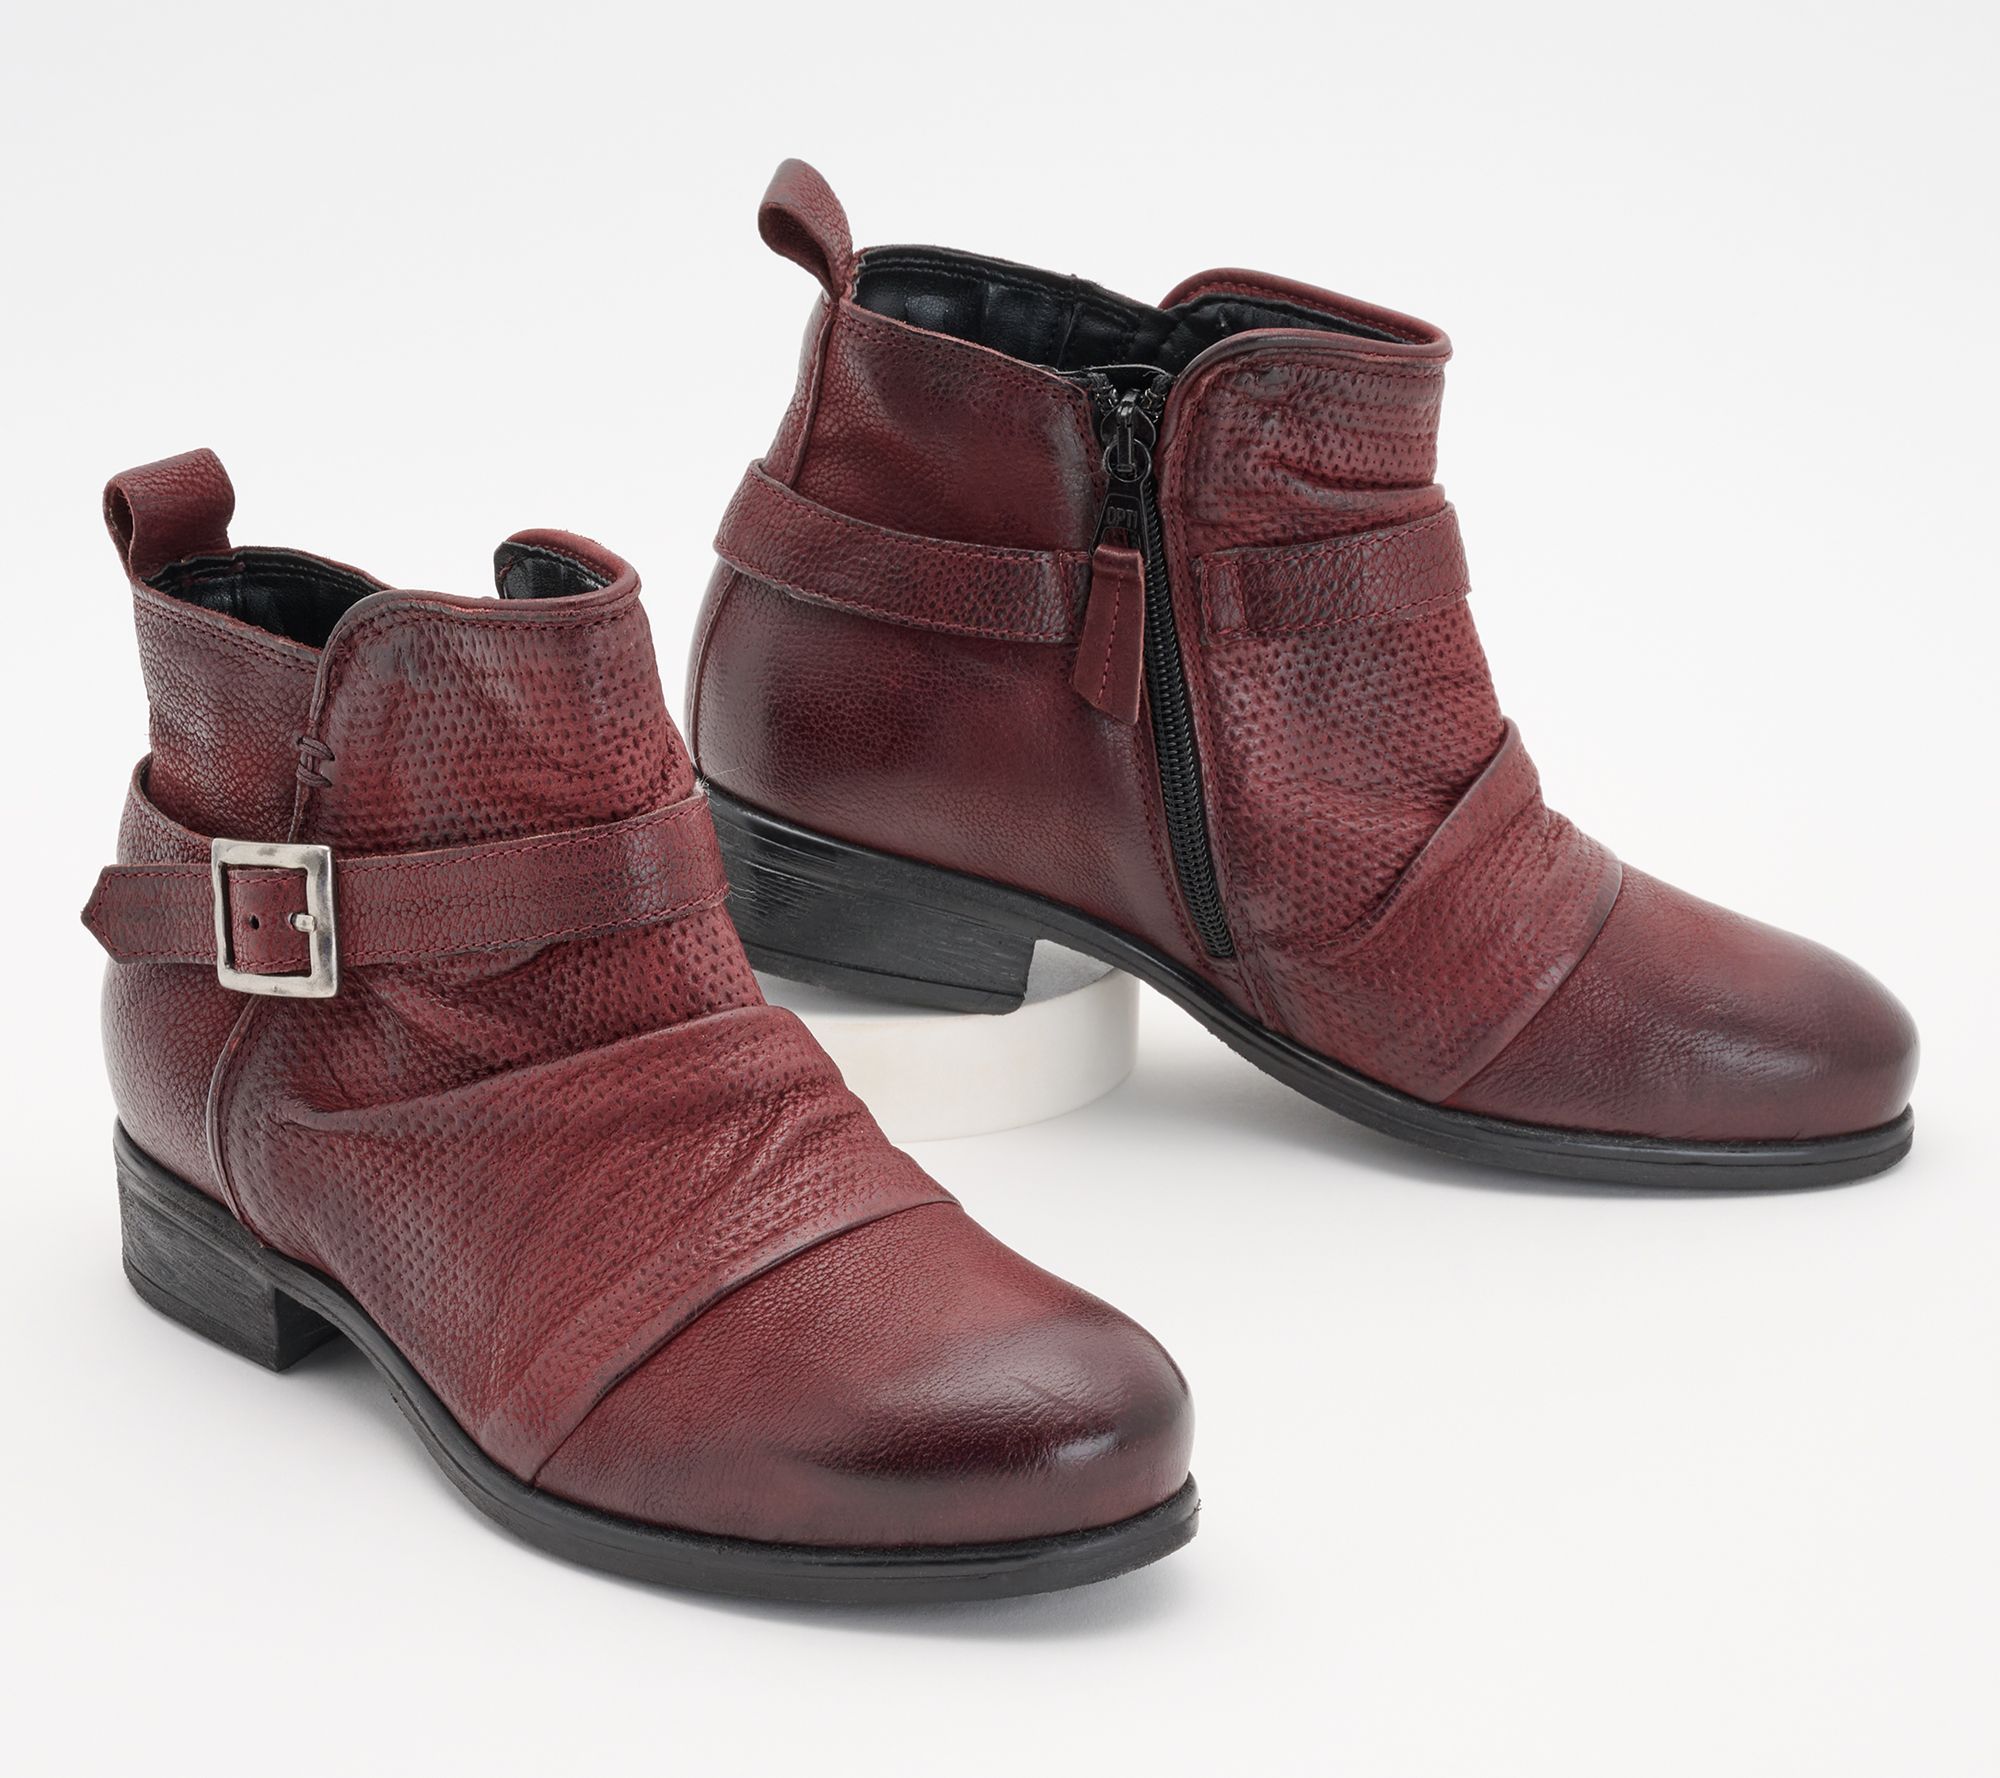 Miz Mooz Women's Shoe Sz 9 (US Women's) Leather Ankle Boots Buckle - Red A607626